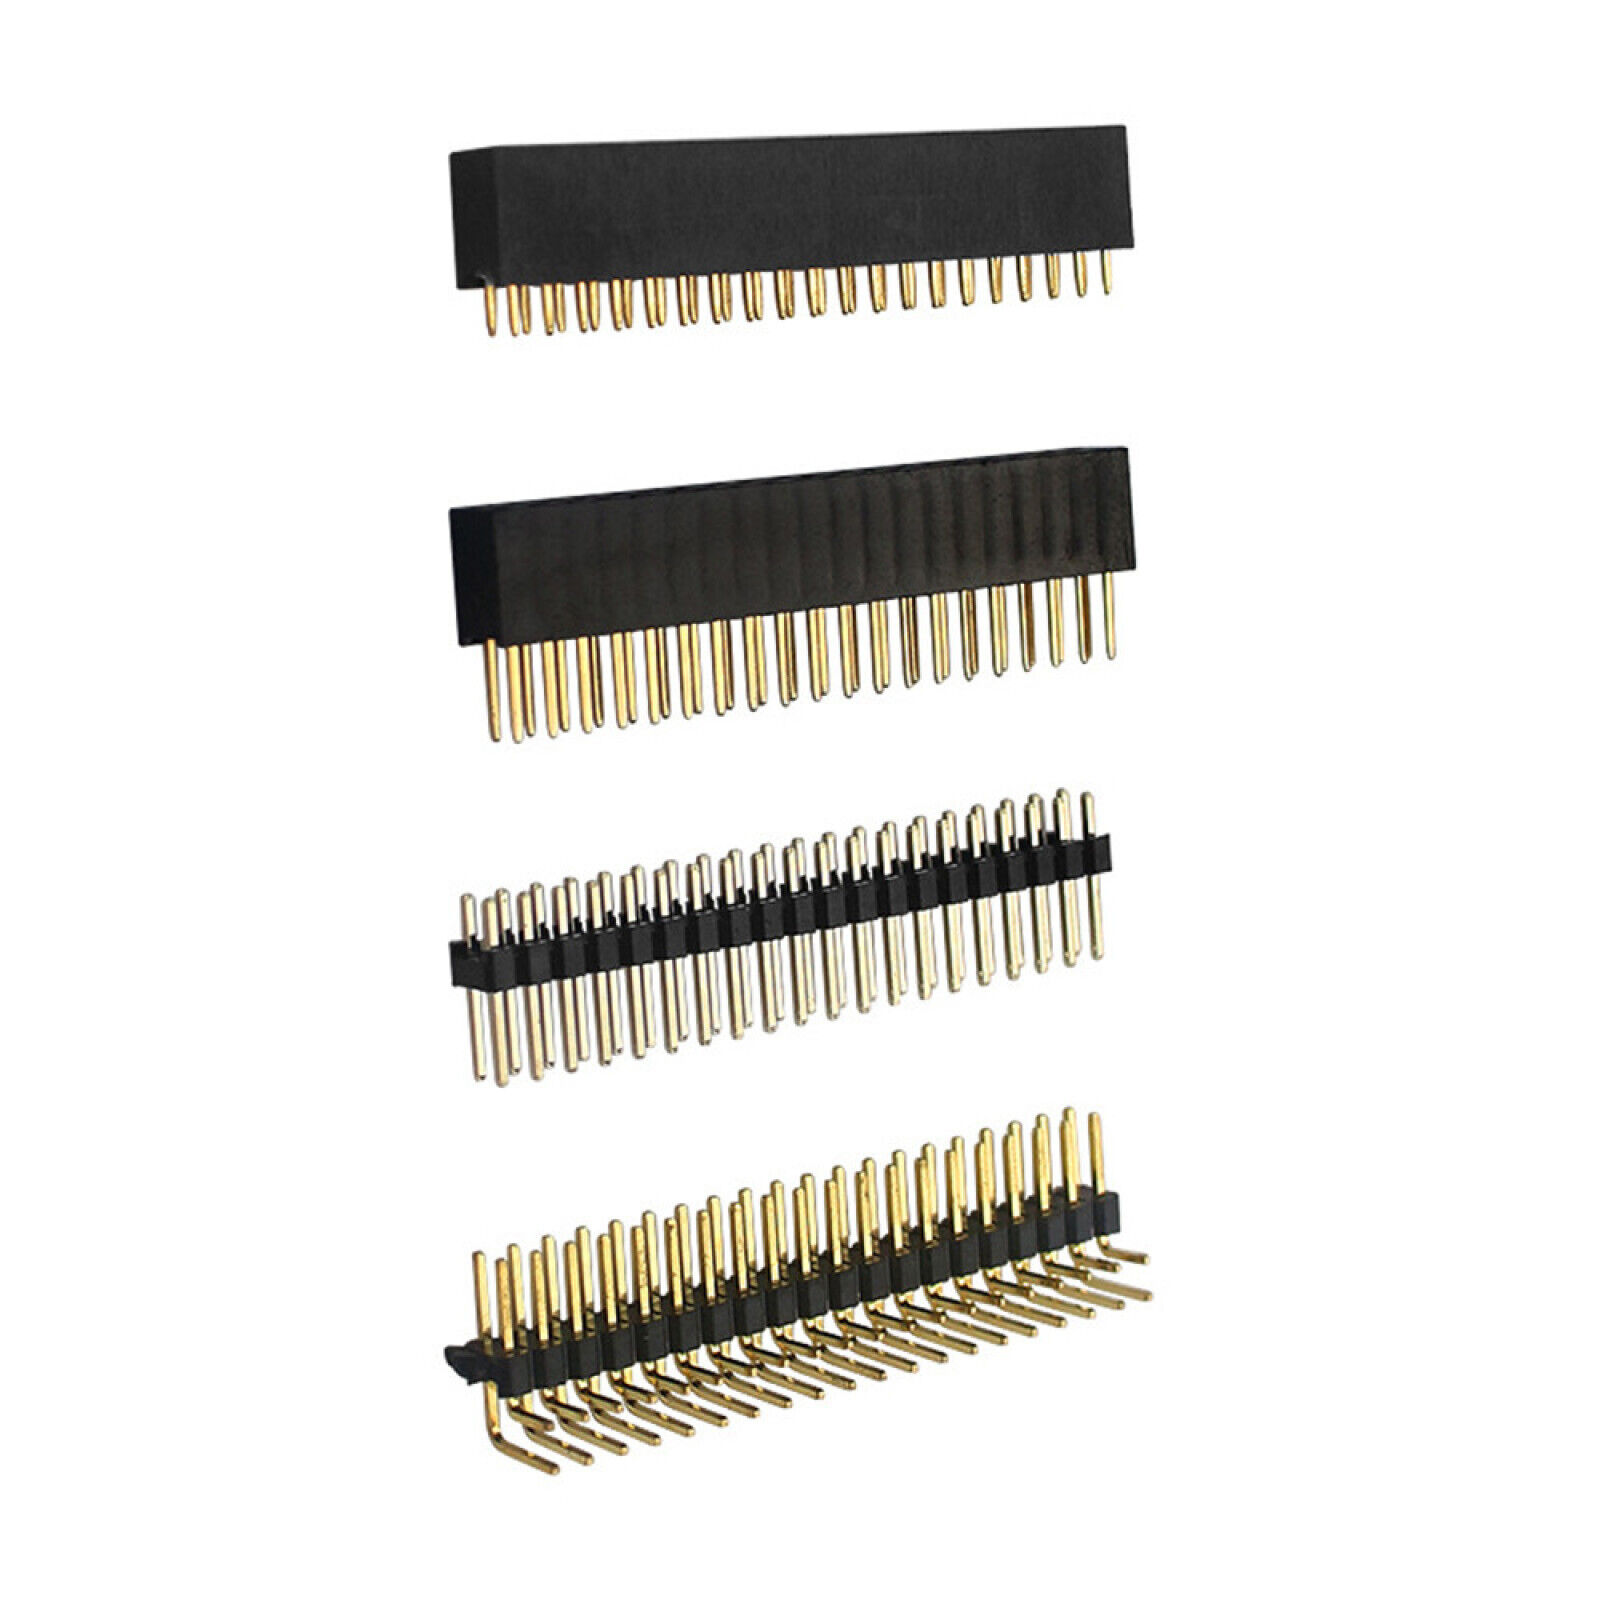 4x 2x20 PIN Socket Dual Male Header Pin Connector for Raspberry Pi Zero/Zero W h